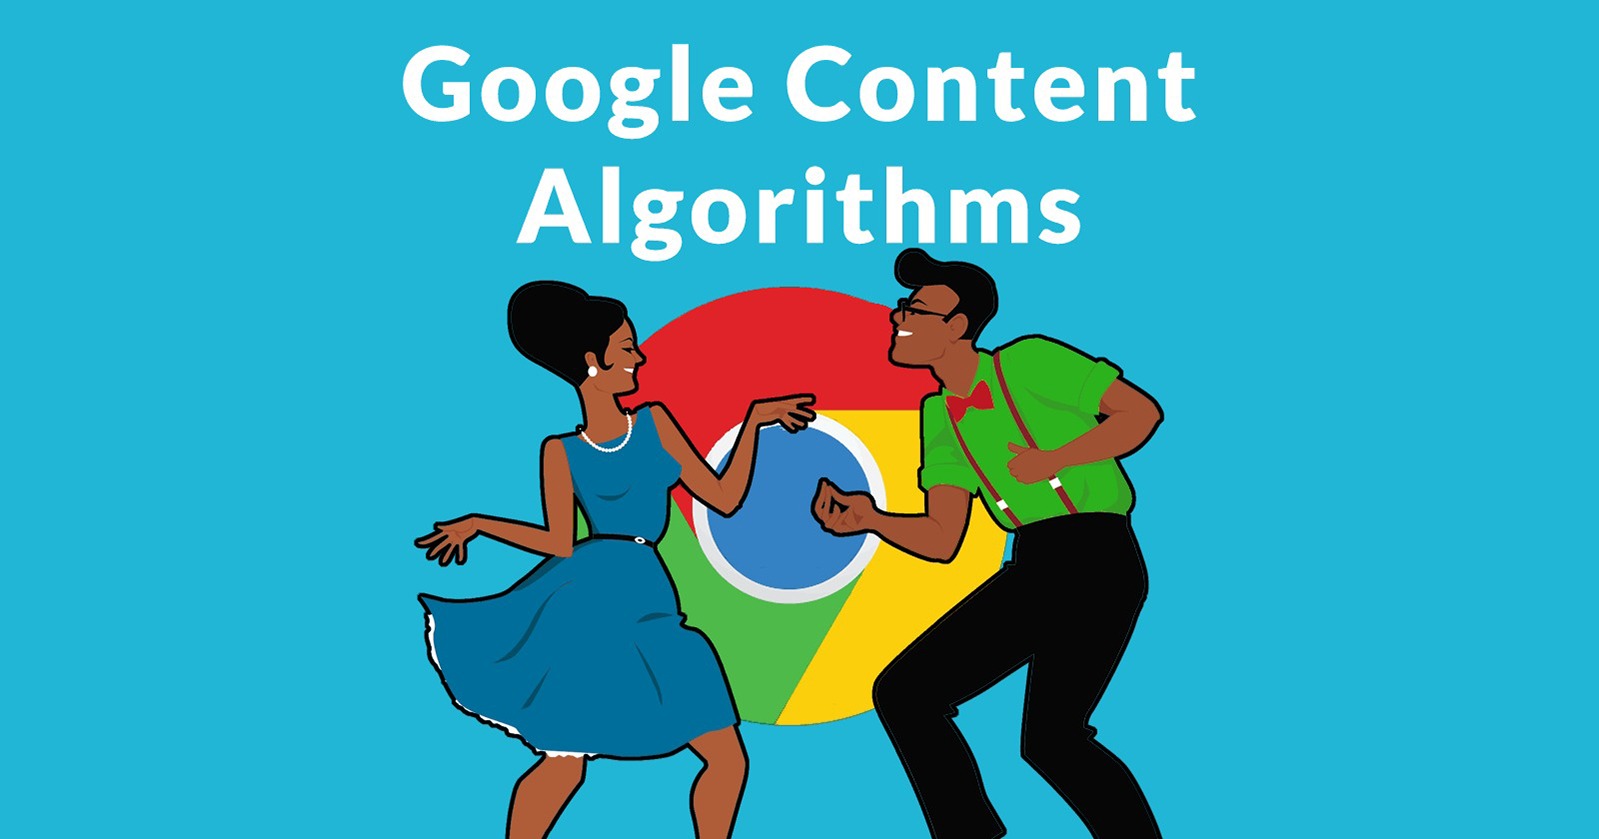 Google Algorithm recognizes the content